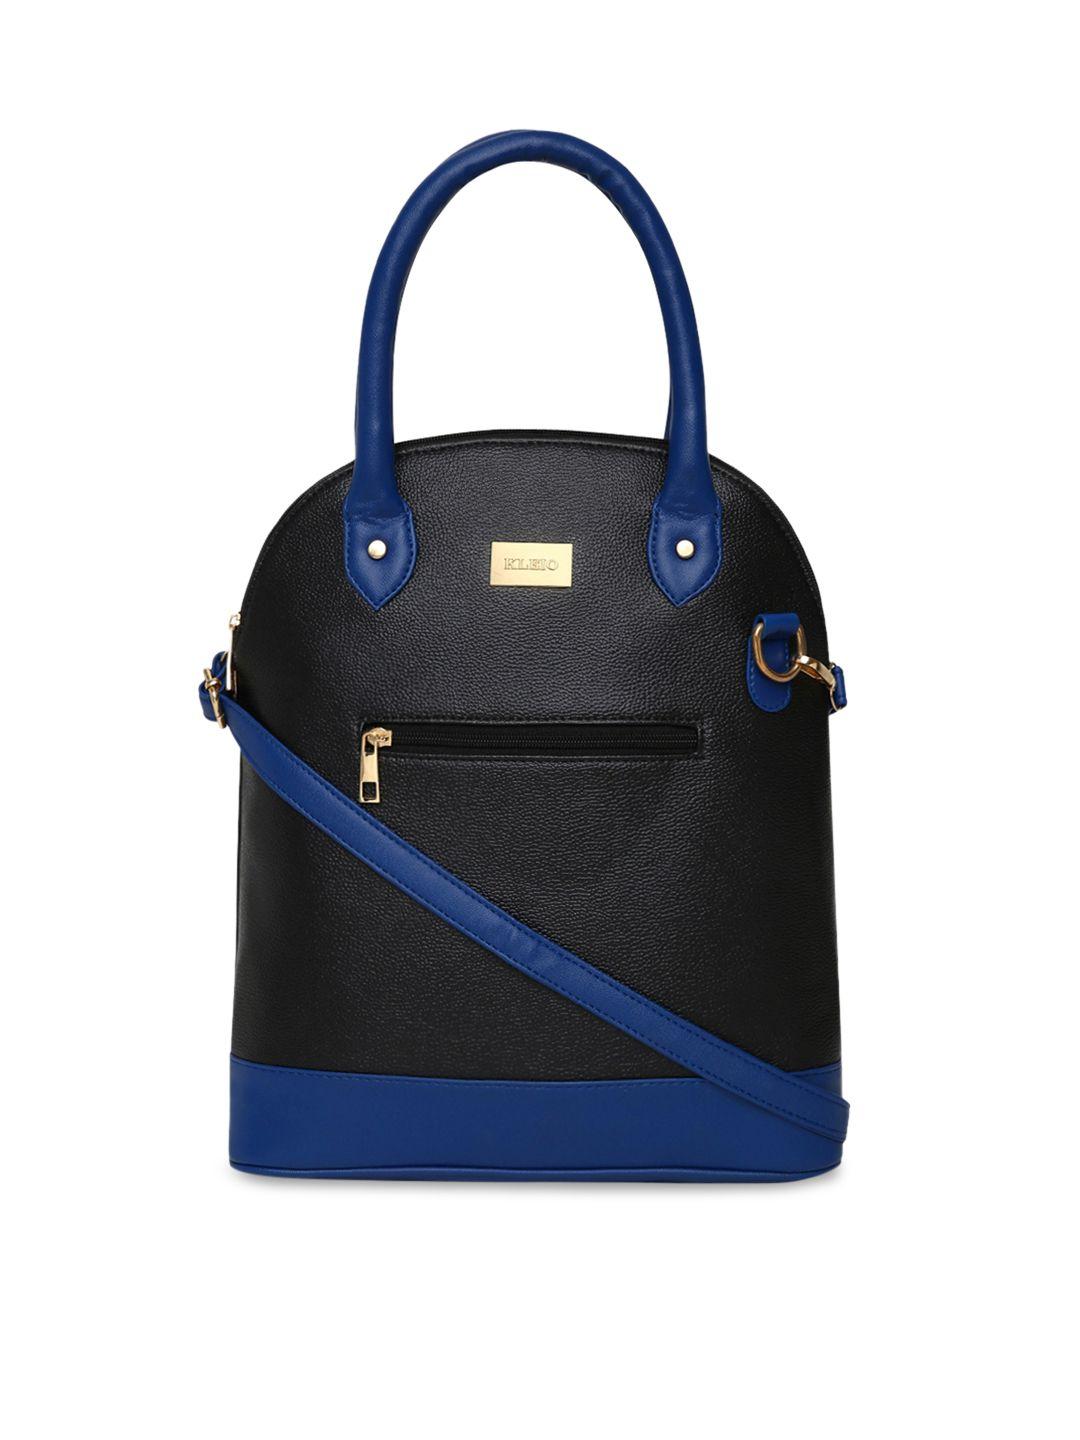 kleio black & blue colourblocked handheld bag